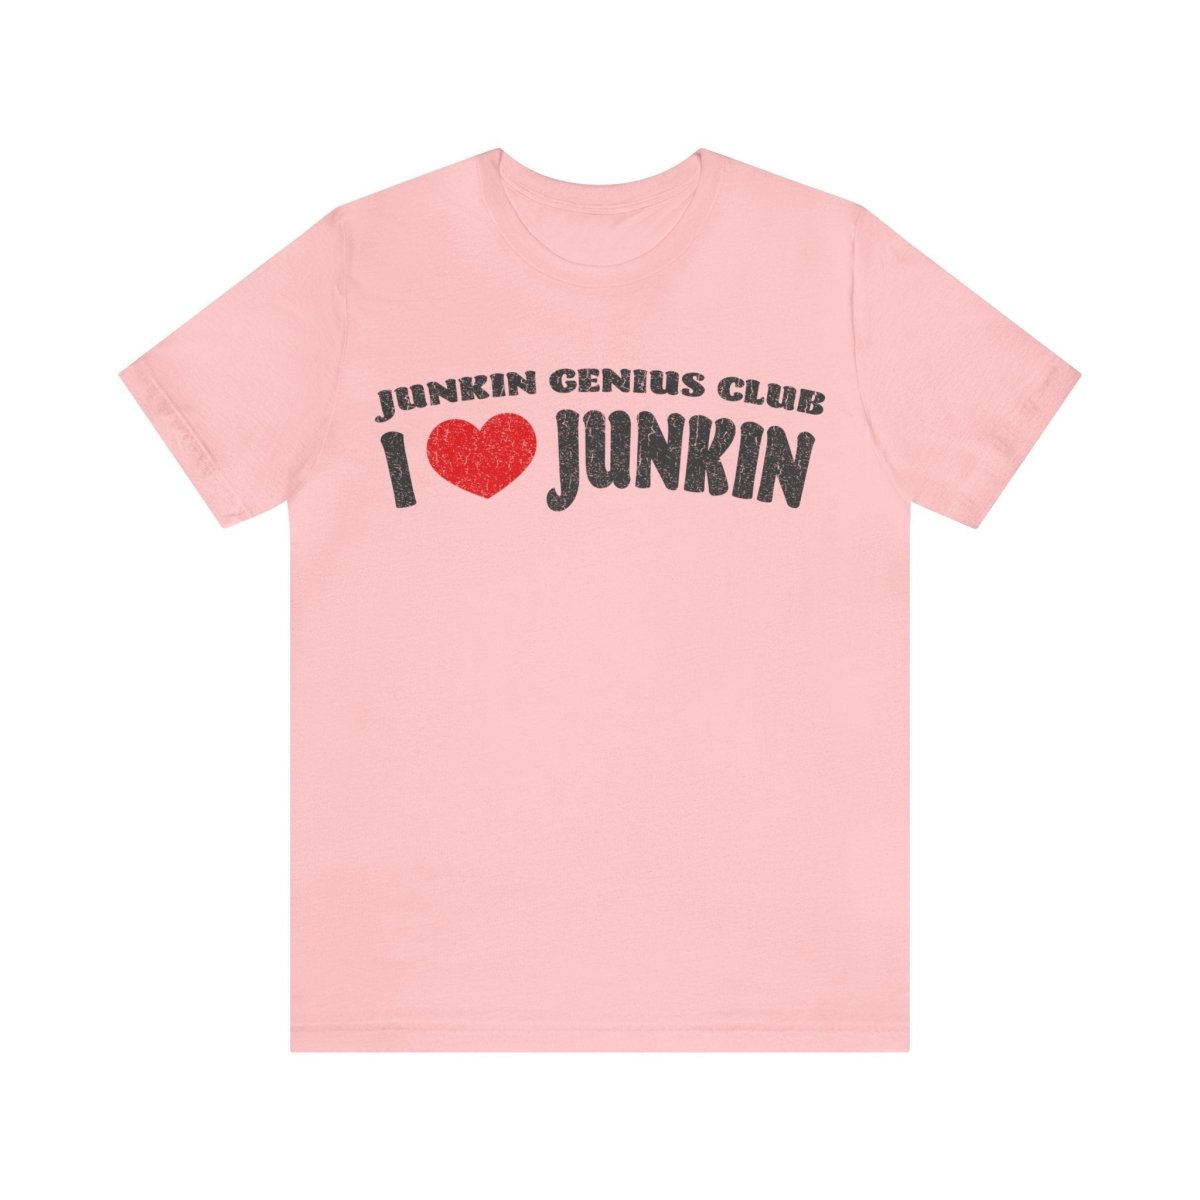 I Love Junkin T-Shirt, Garage Sales, Flea Markets, Antiques, Junkin' Genius Club